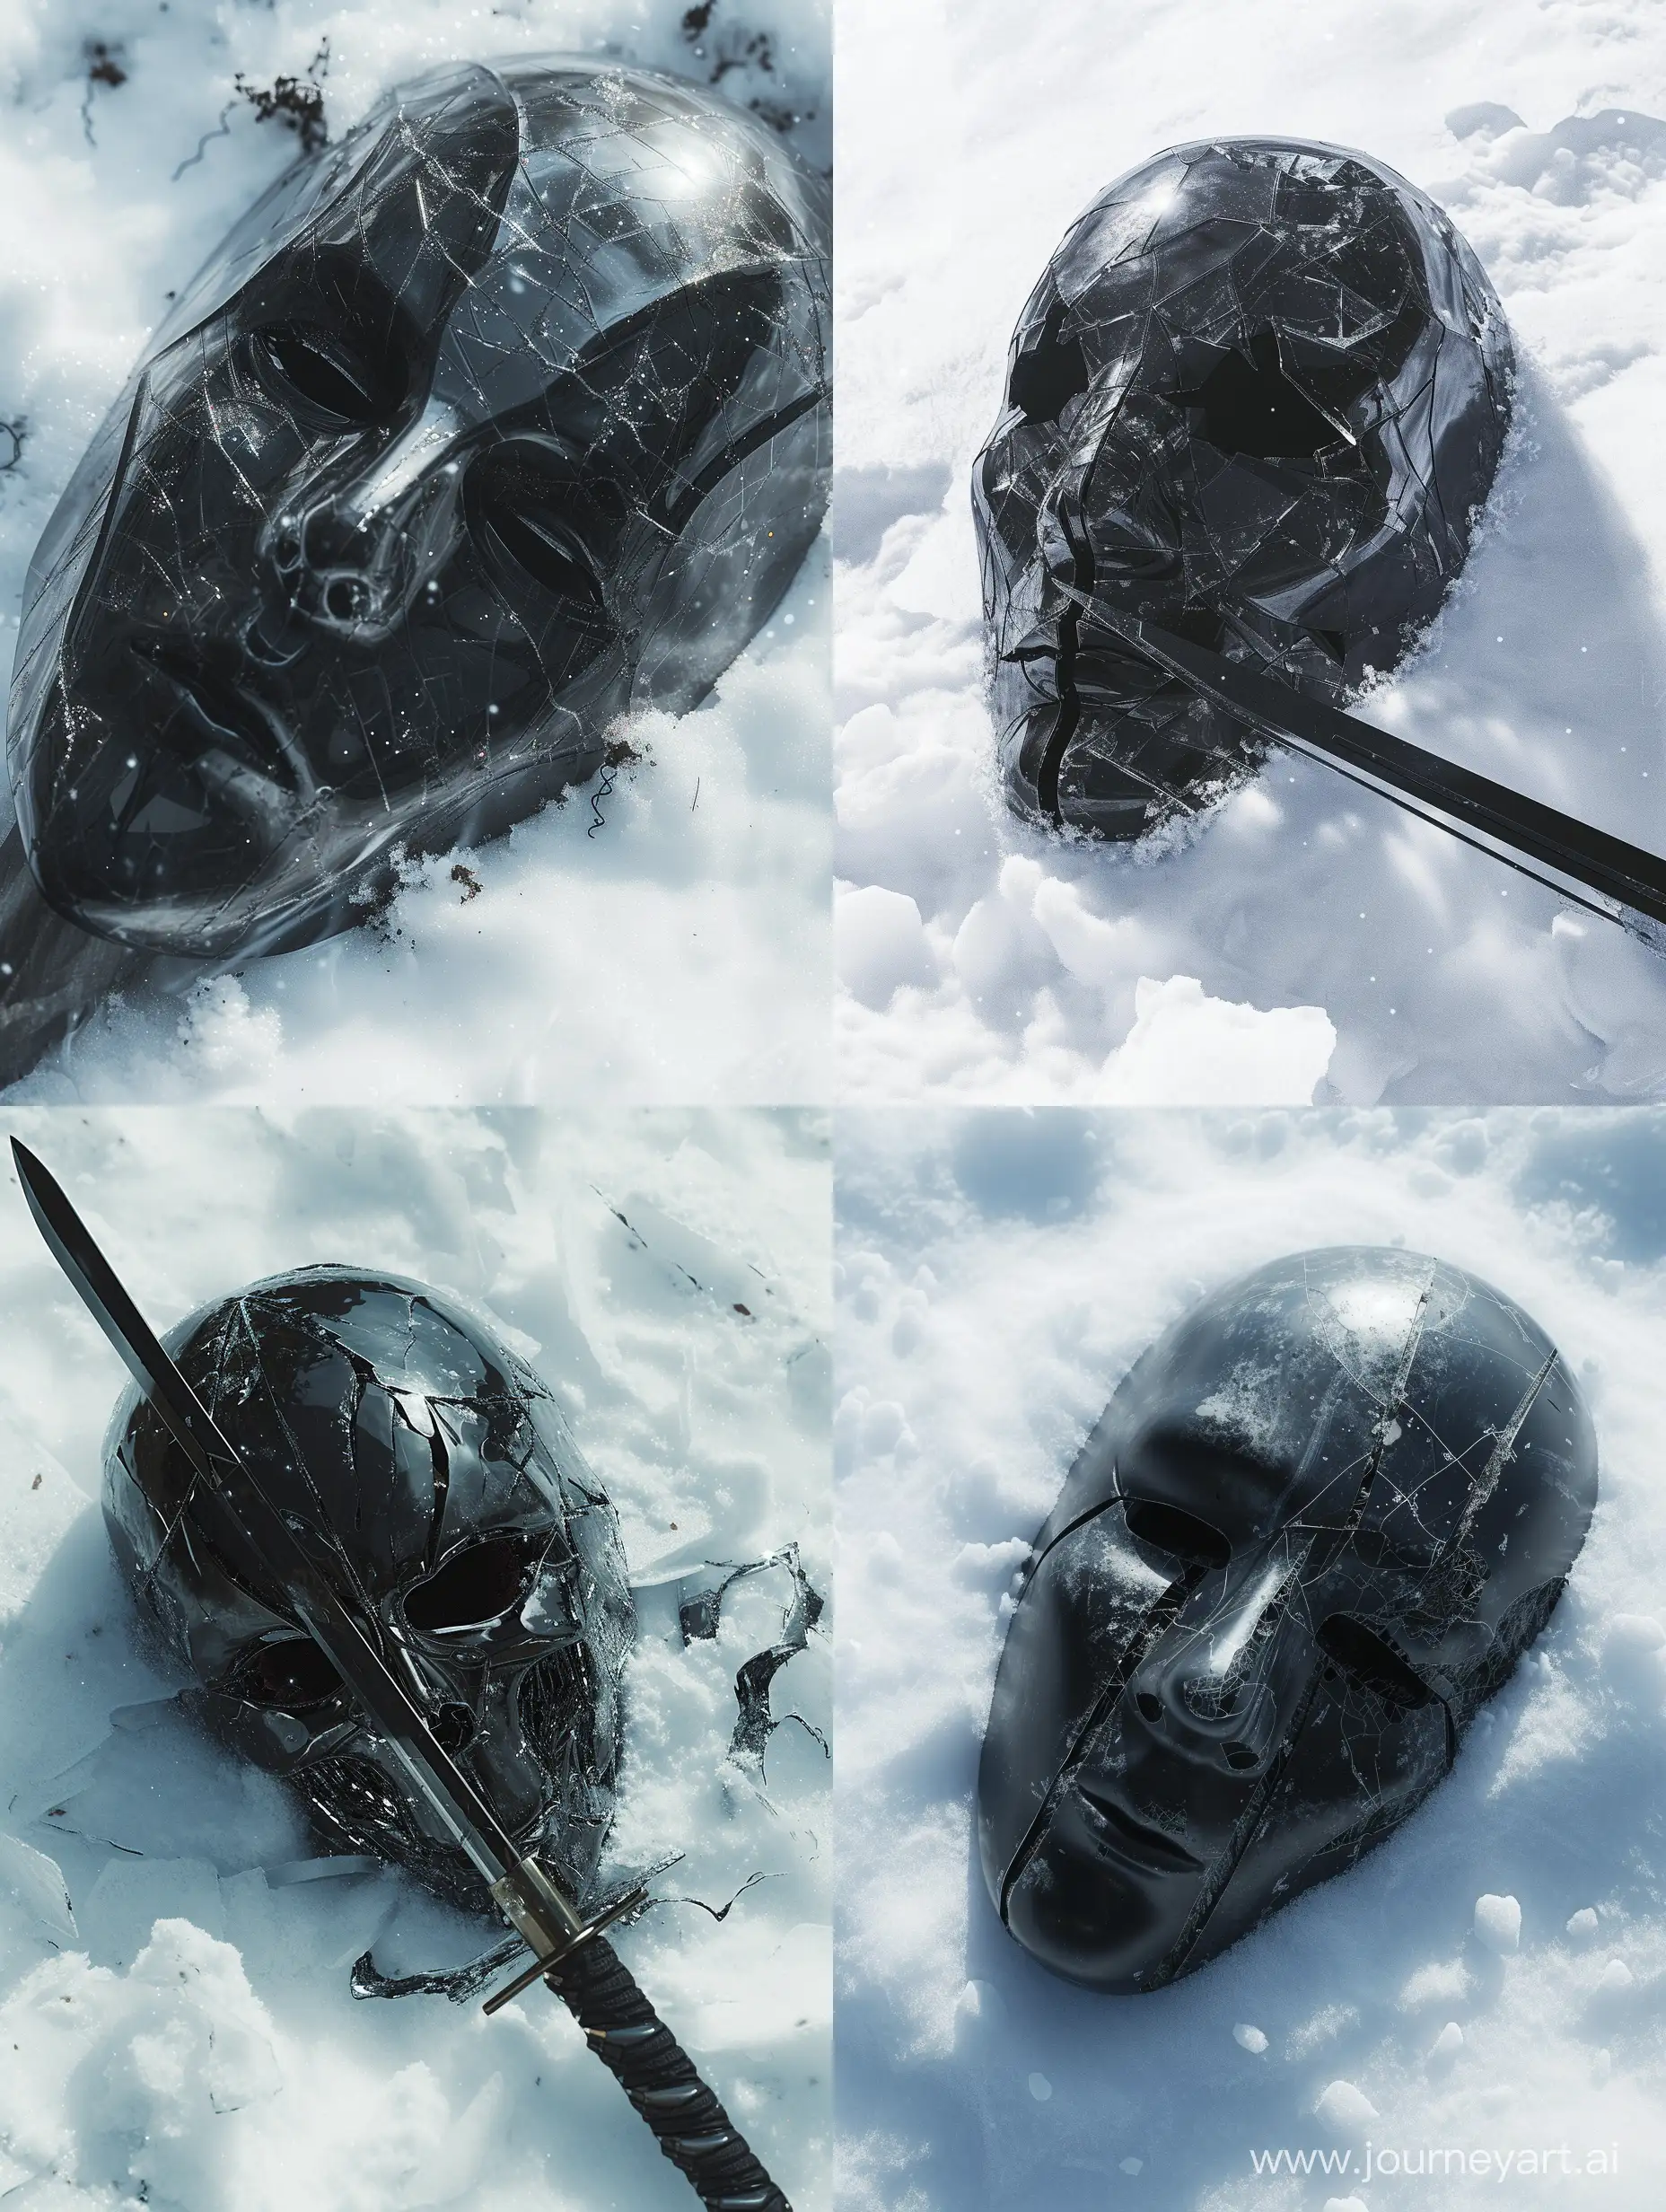 Futuristic-SciFi-Sword-Mask-Resting-on-Snow-in-Dark-Souls-Style